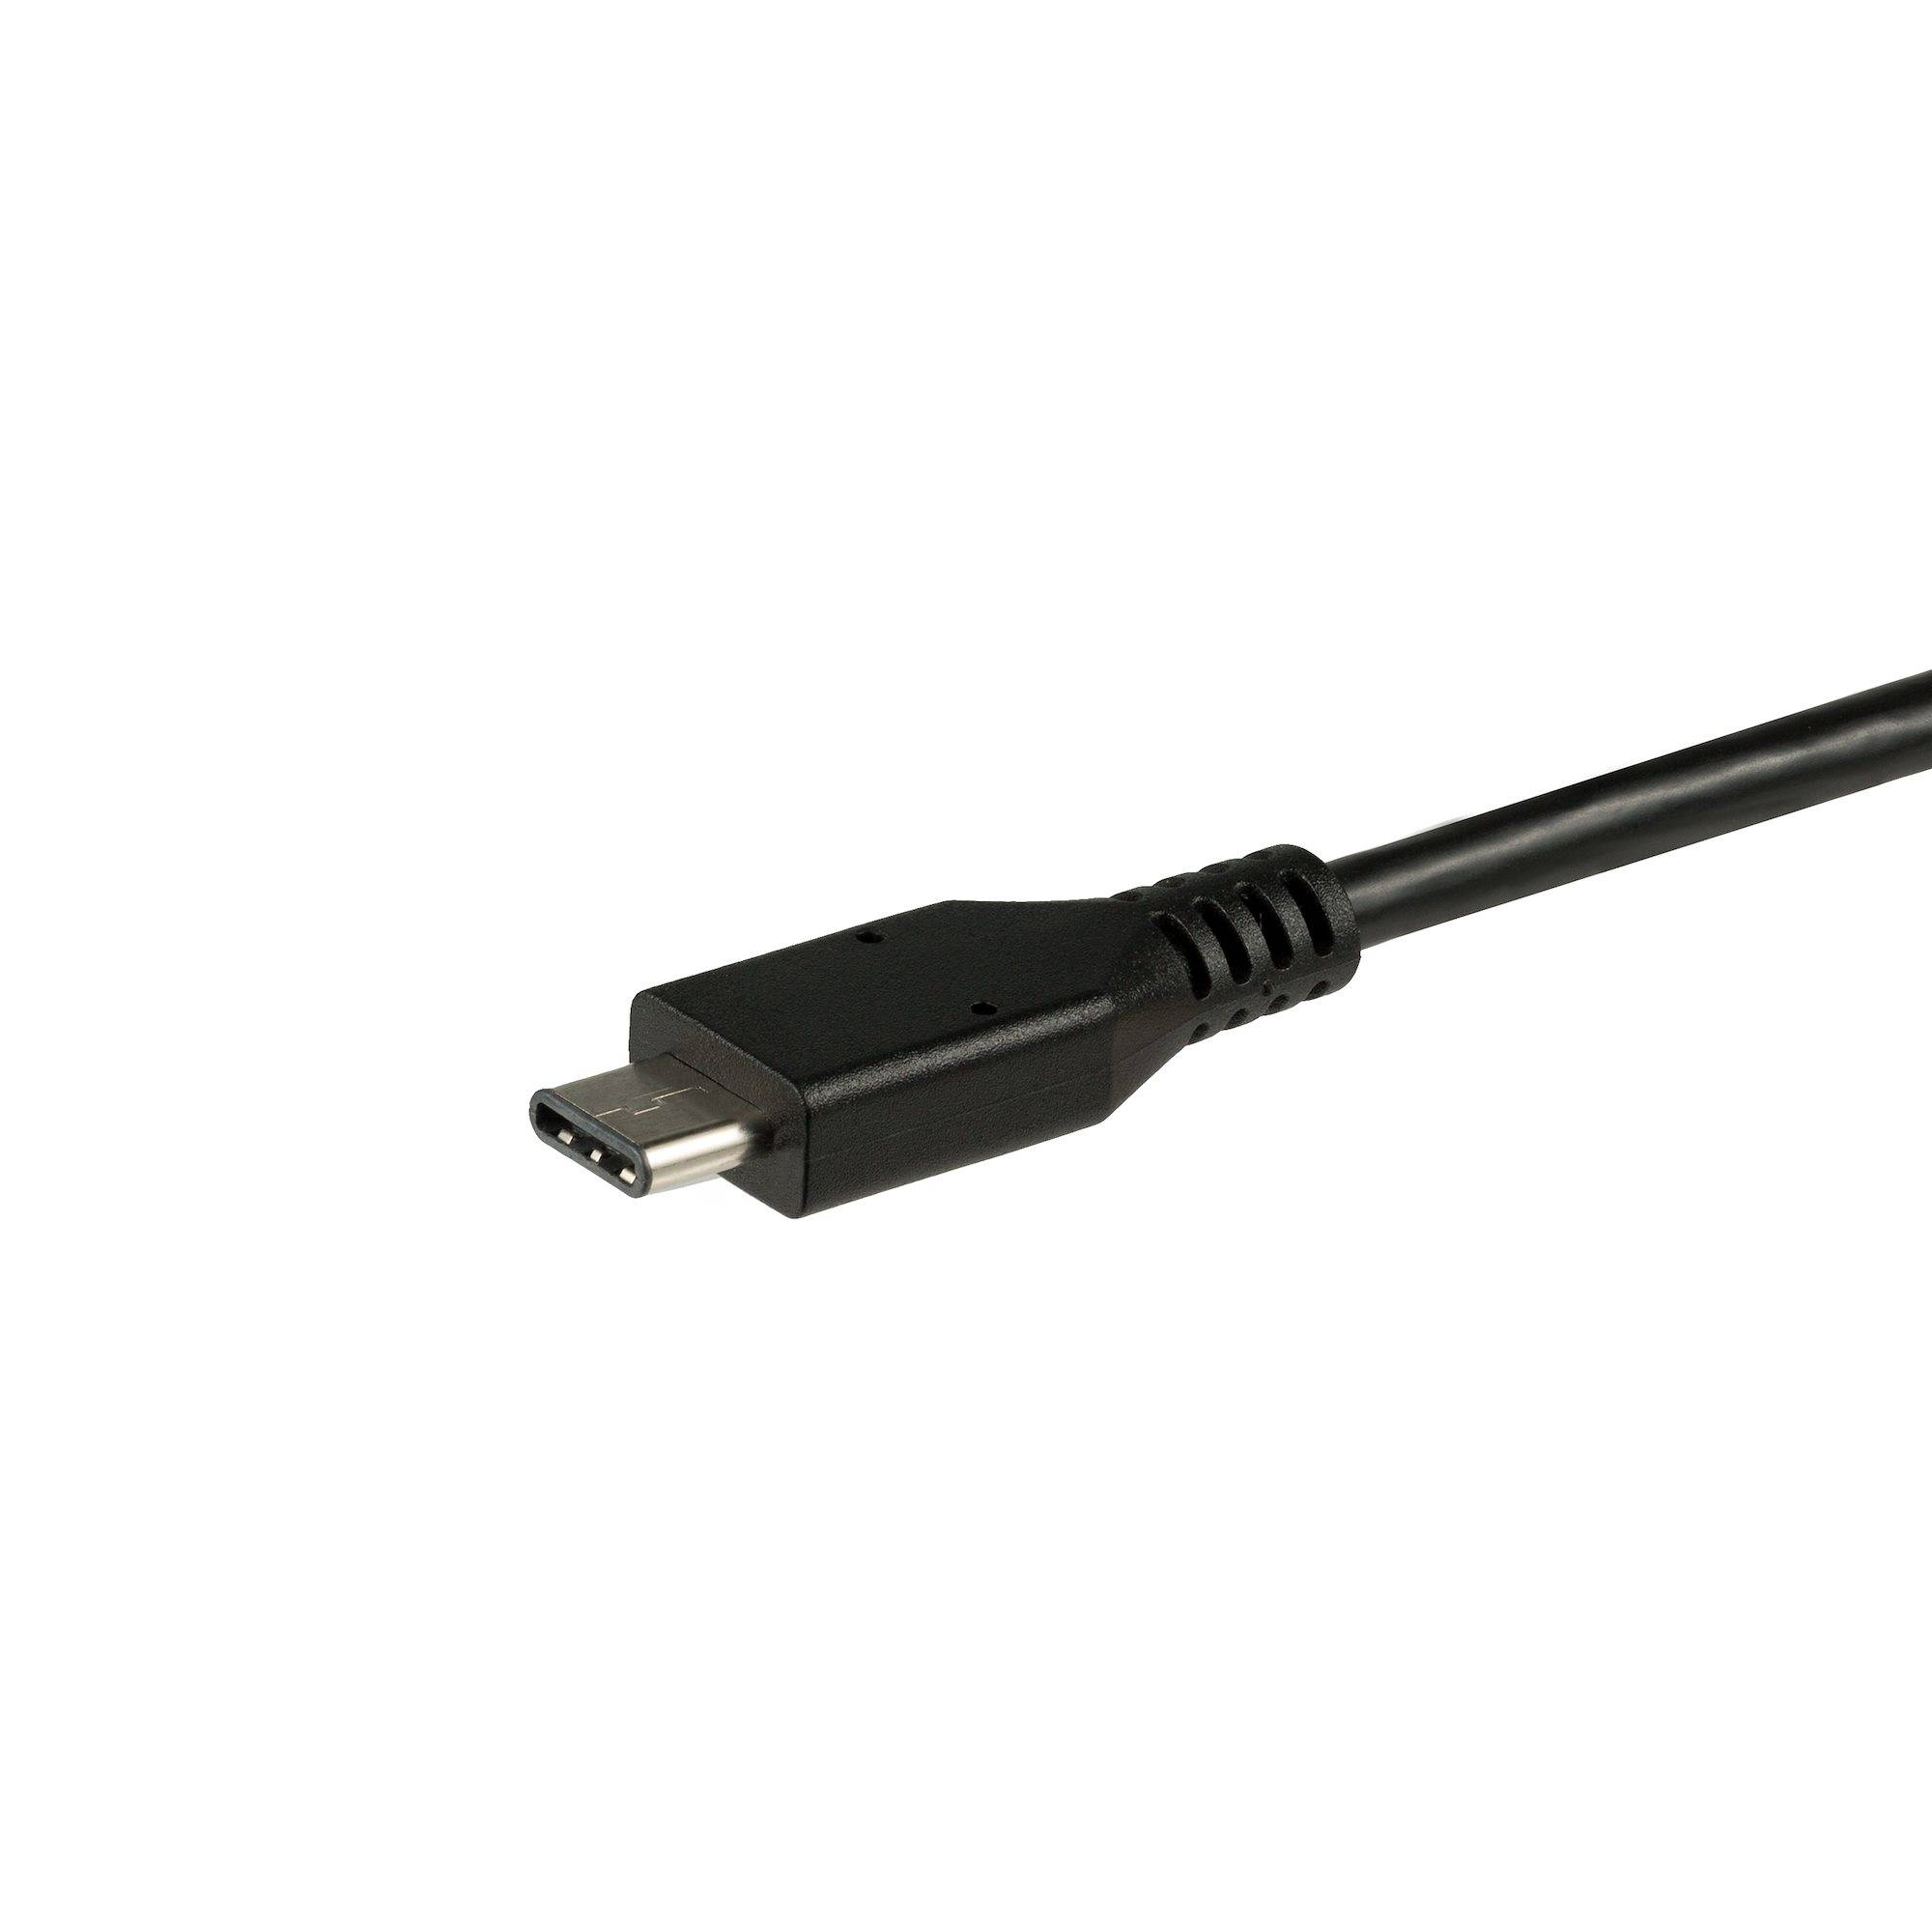 Rca Informatique - image du produit : USB C TO FIBER OPTIC CONVERTER USB 3.0 NETWORK ADAPTER OPEN SFP